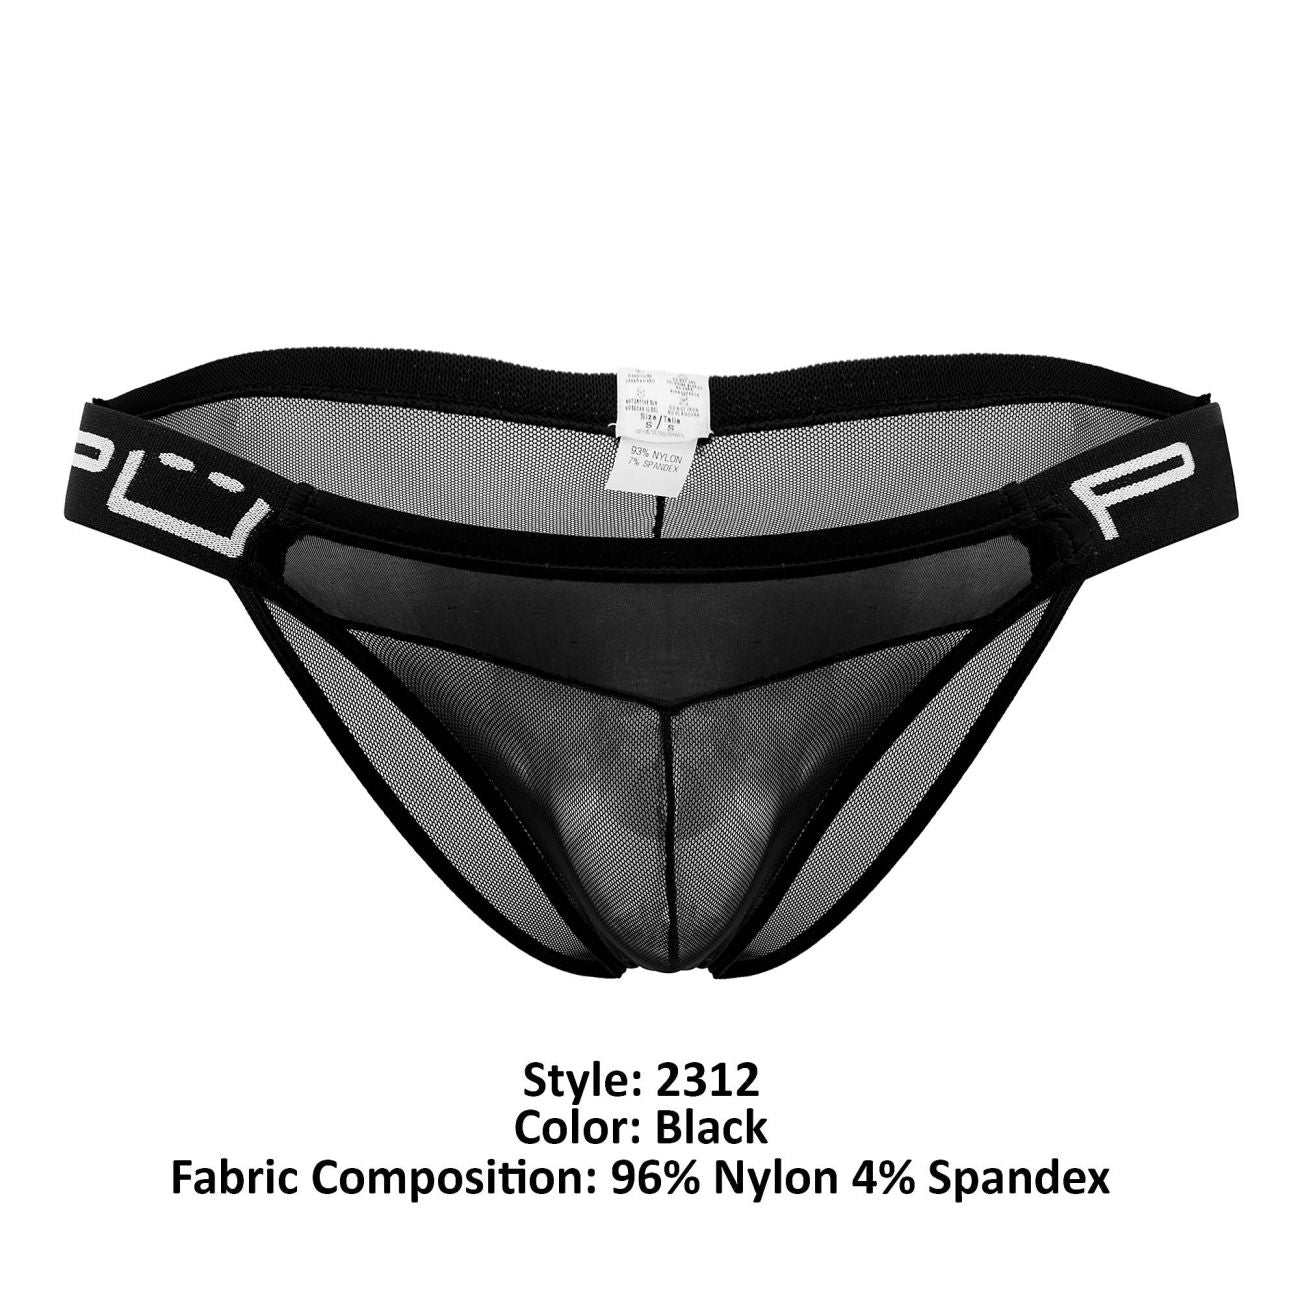 PPU 2312 Mesh Bikini Black